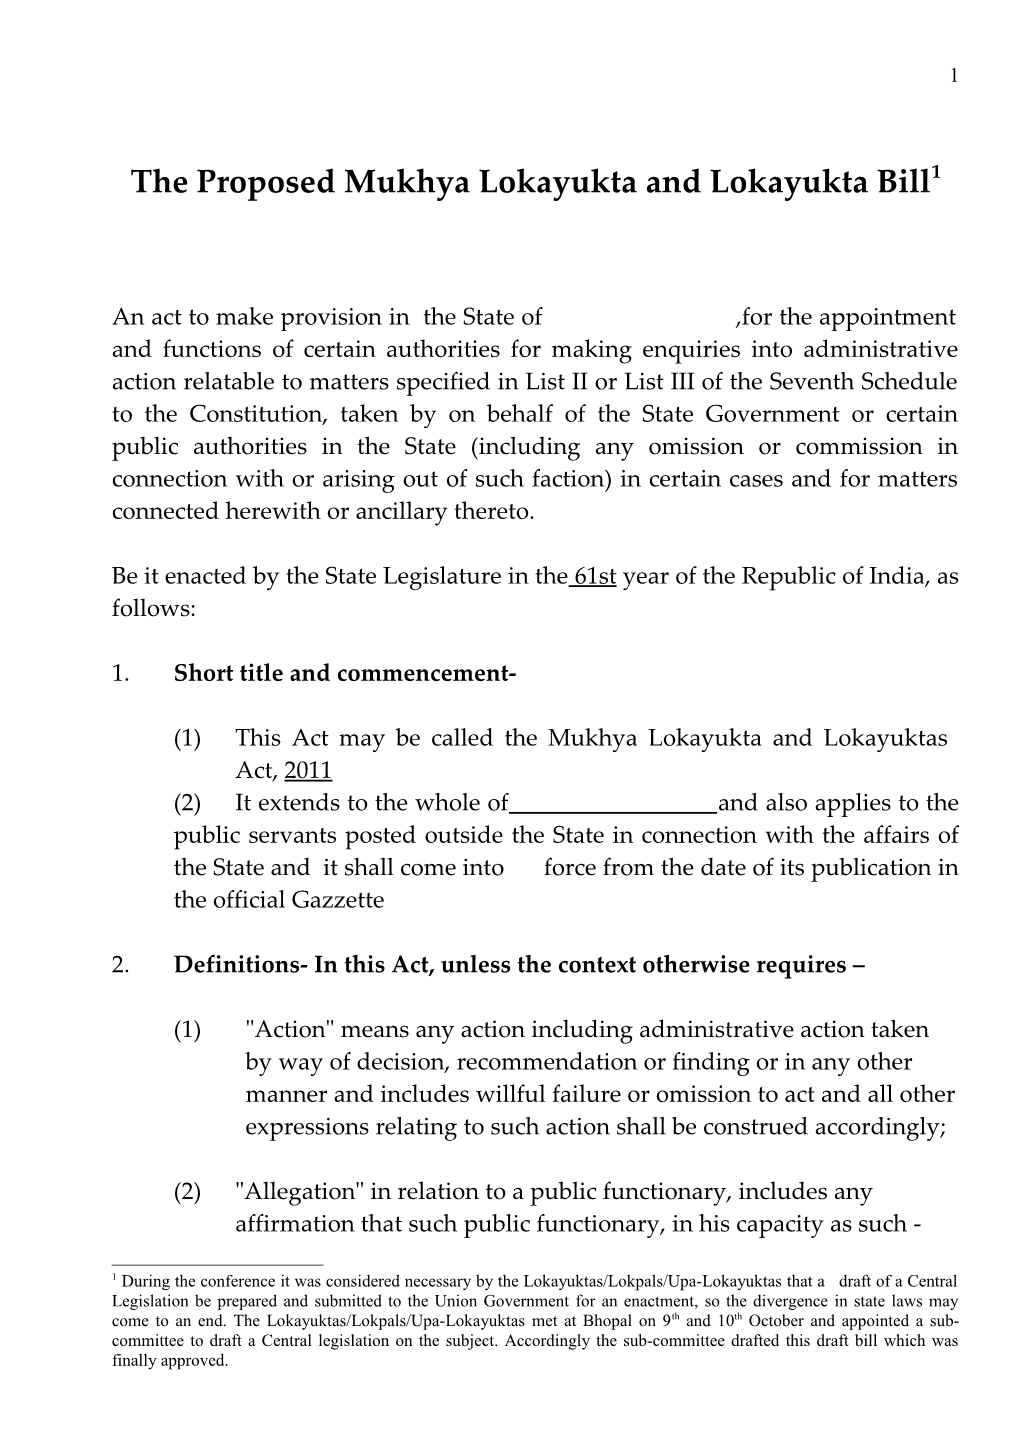 The Proposed Mukhya Lokayukta and Lokayukta Bill